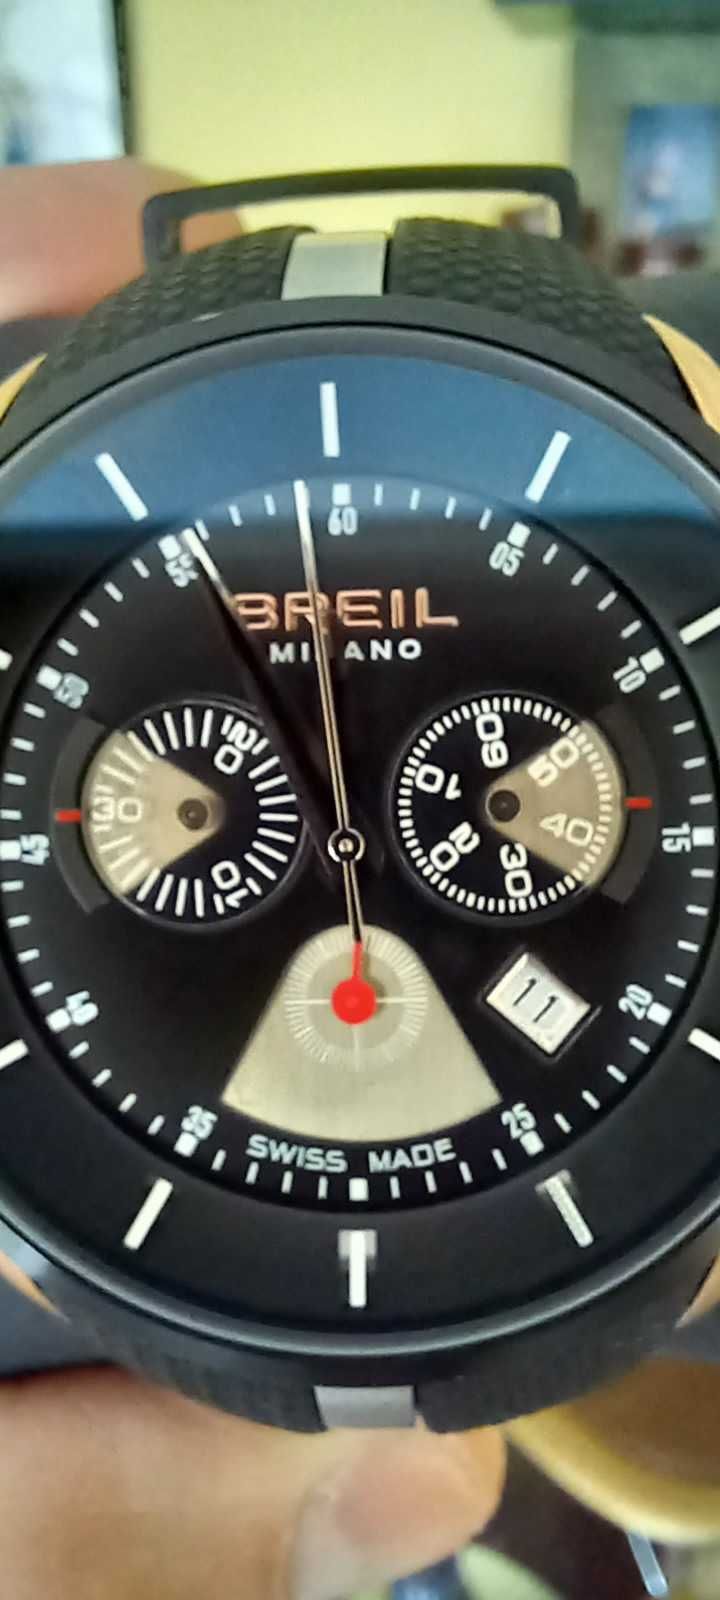 Relógio da marca Breil